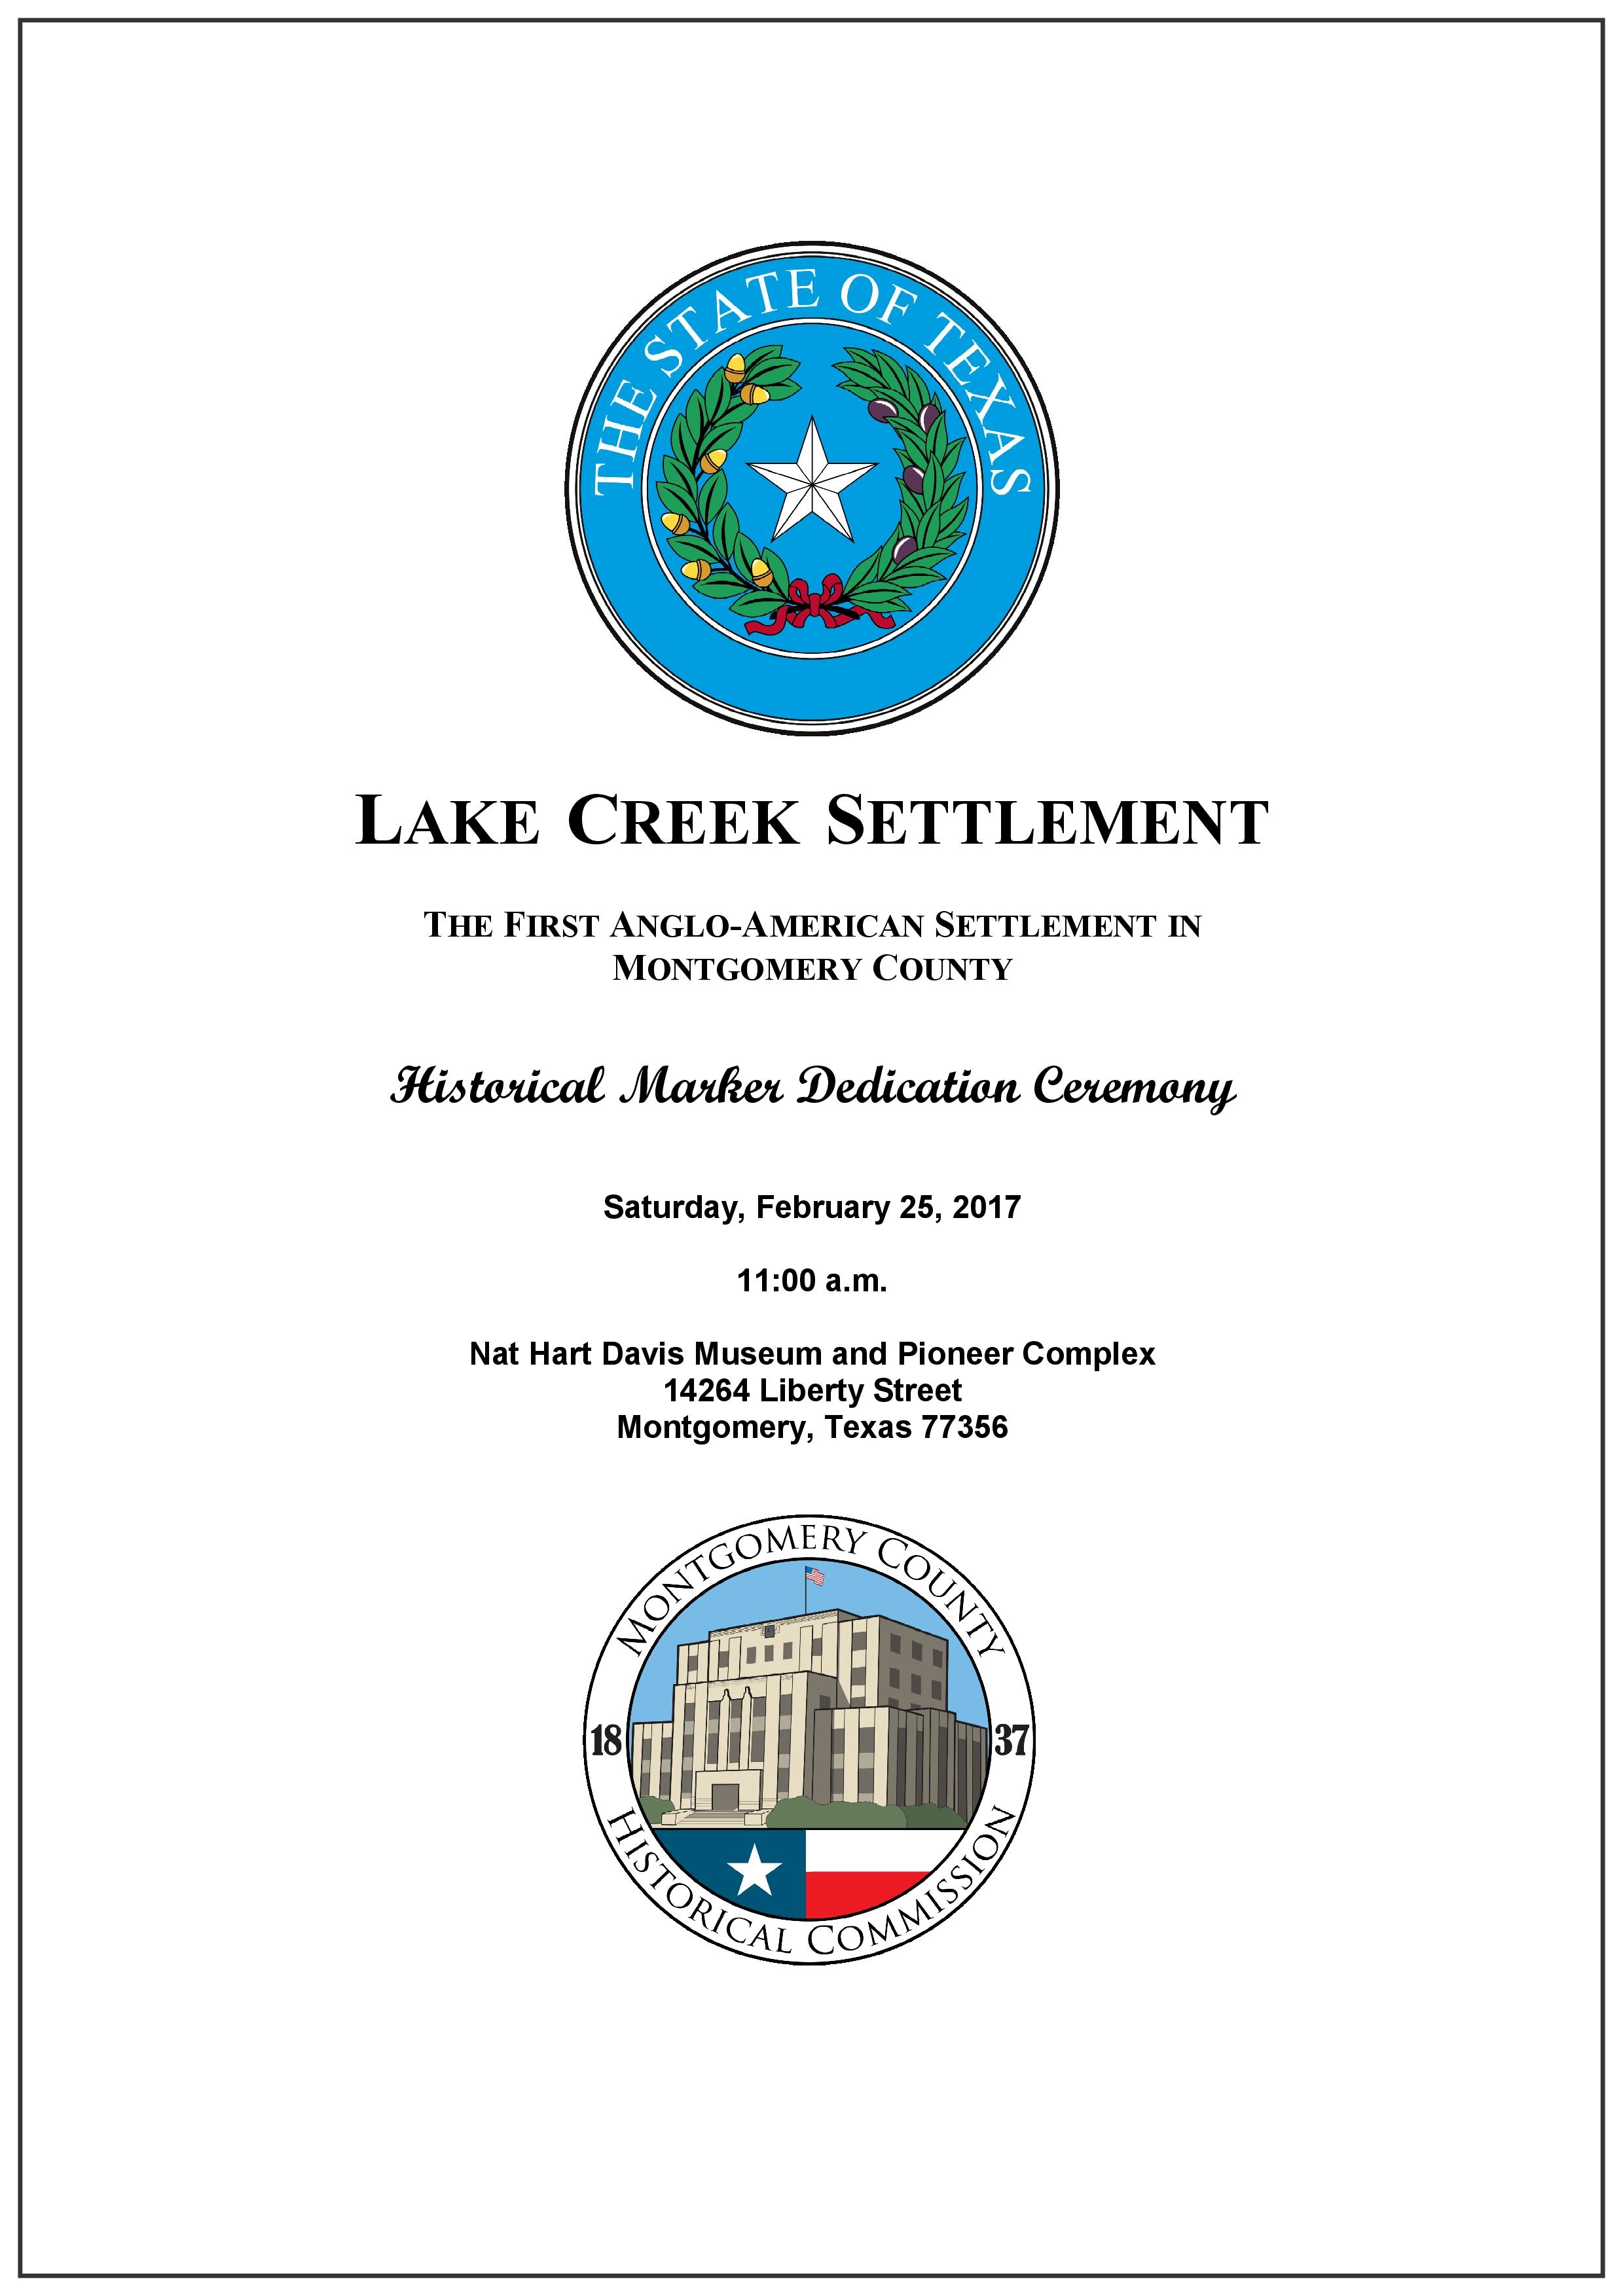 Click to Read the Lake Creek Settlement Marker Dedication Program